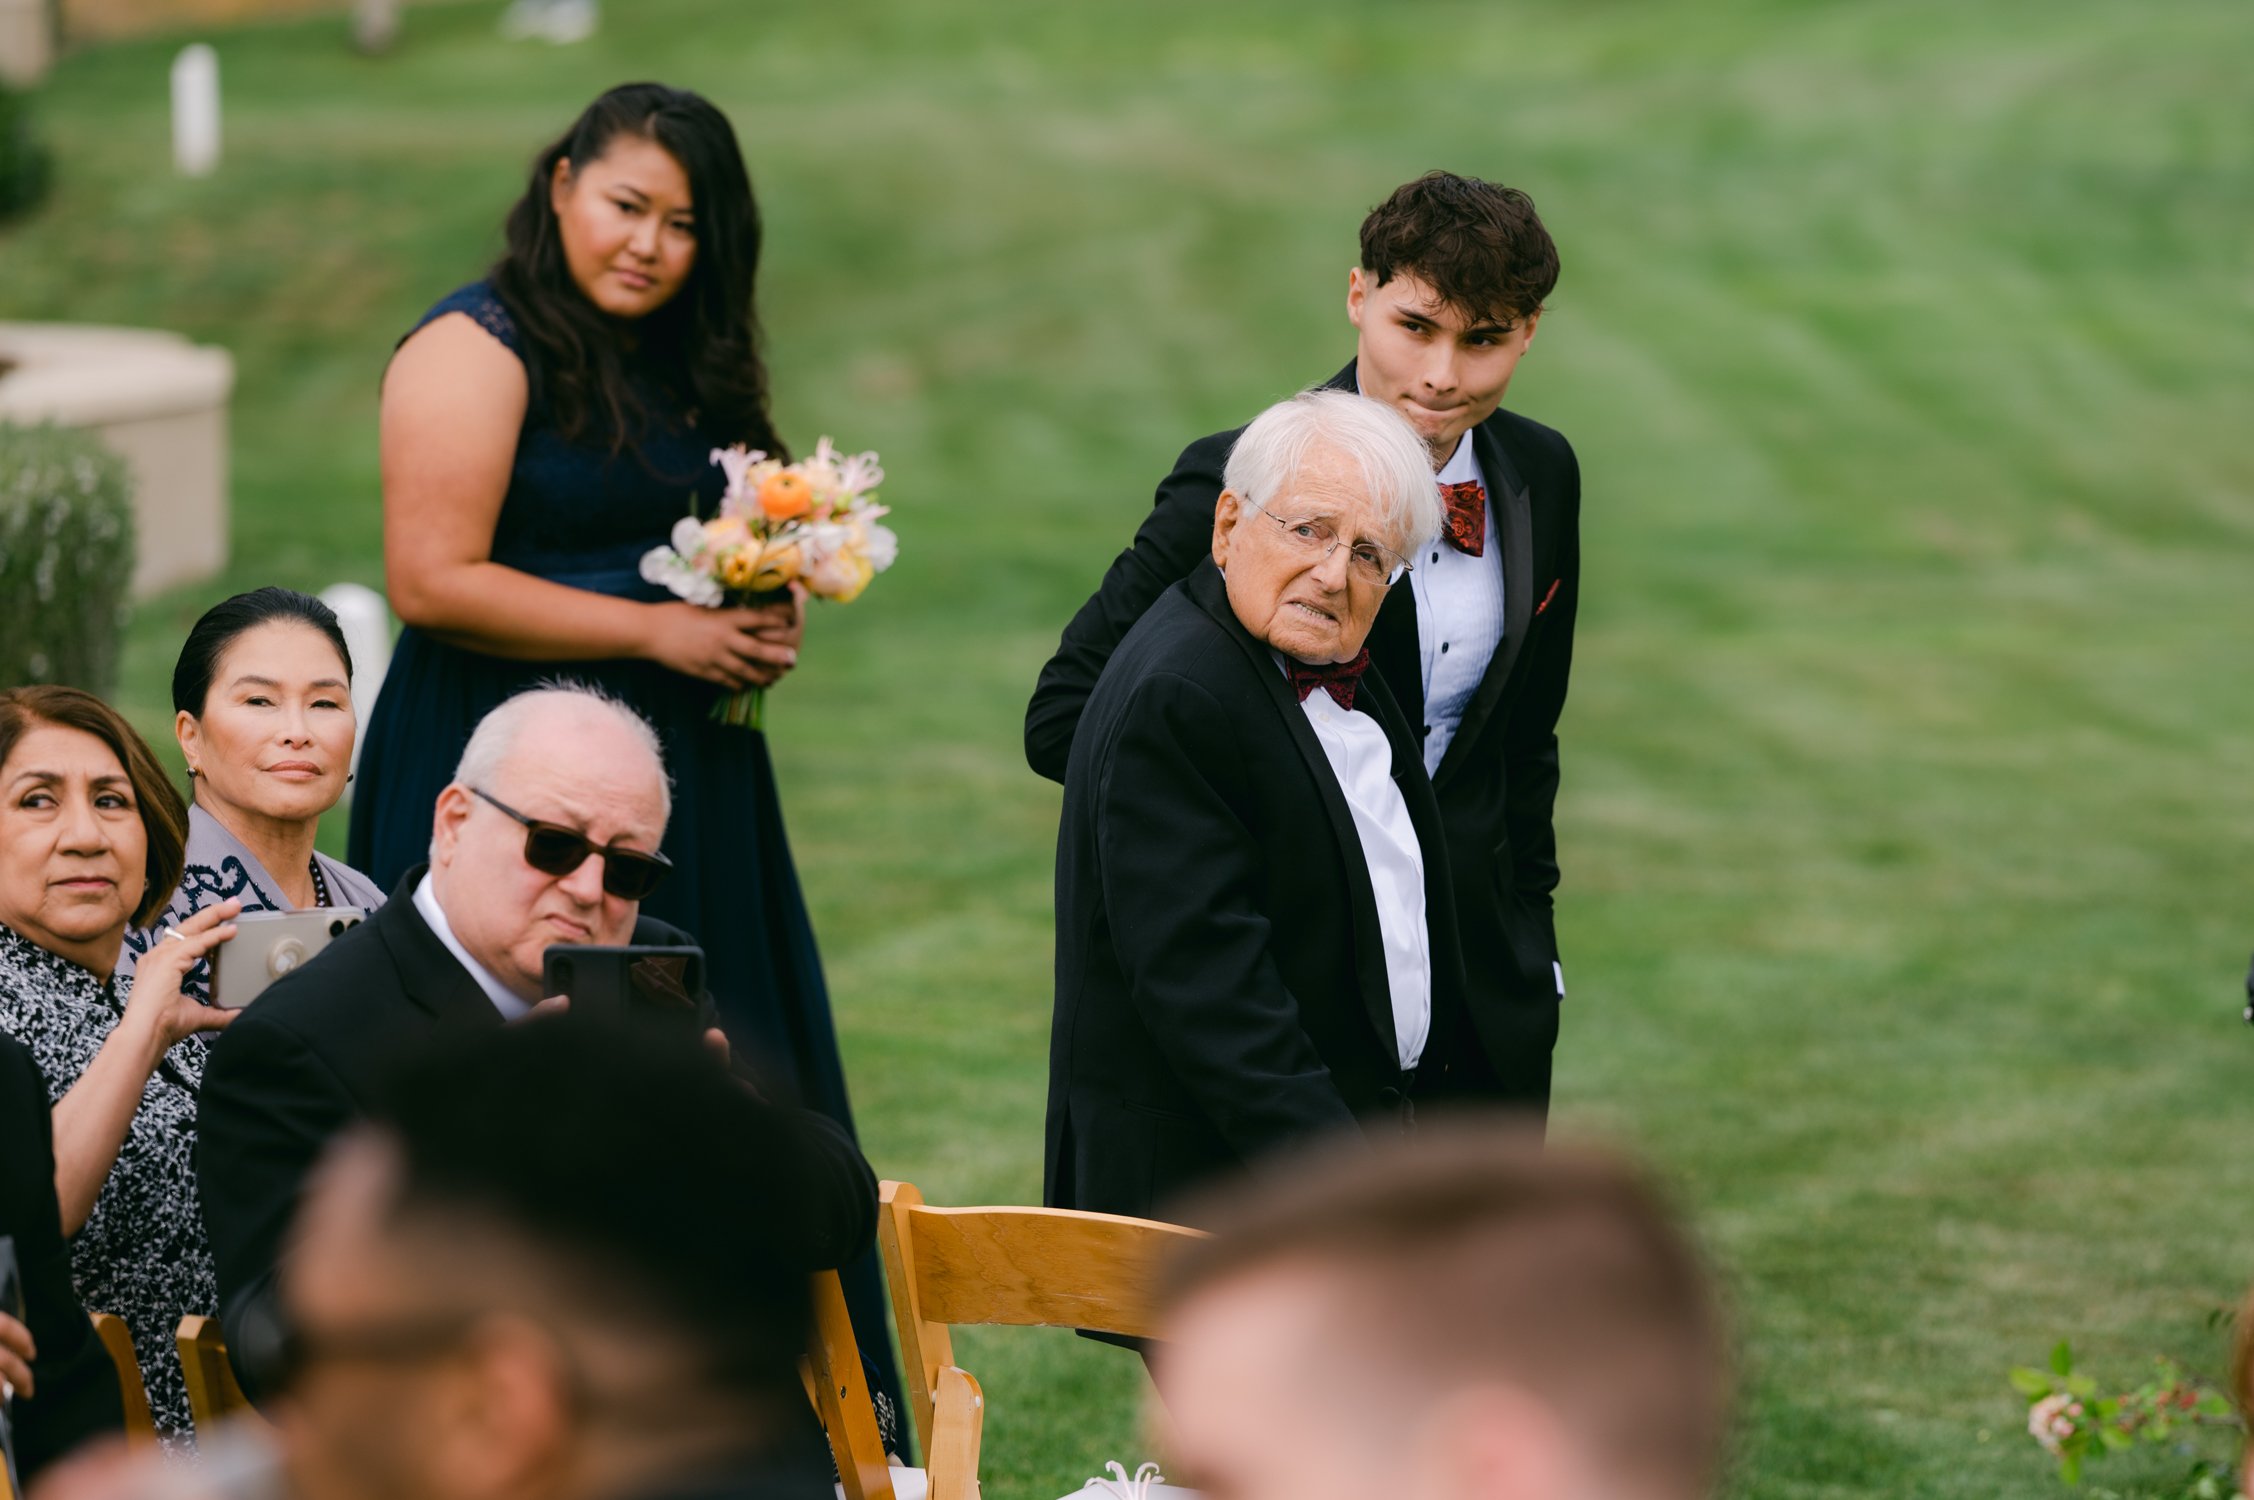 pebble beach resort wedding photo of dad looking back at his daughter walking down the aisle